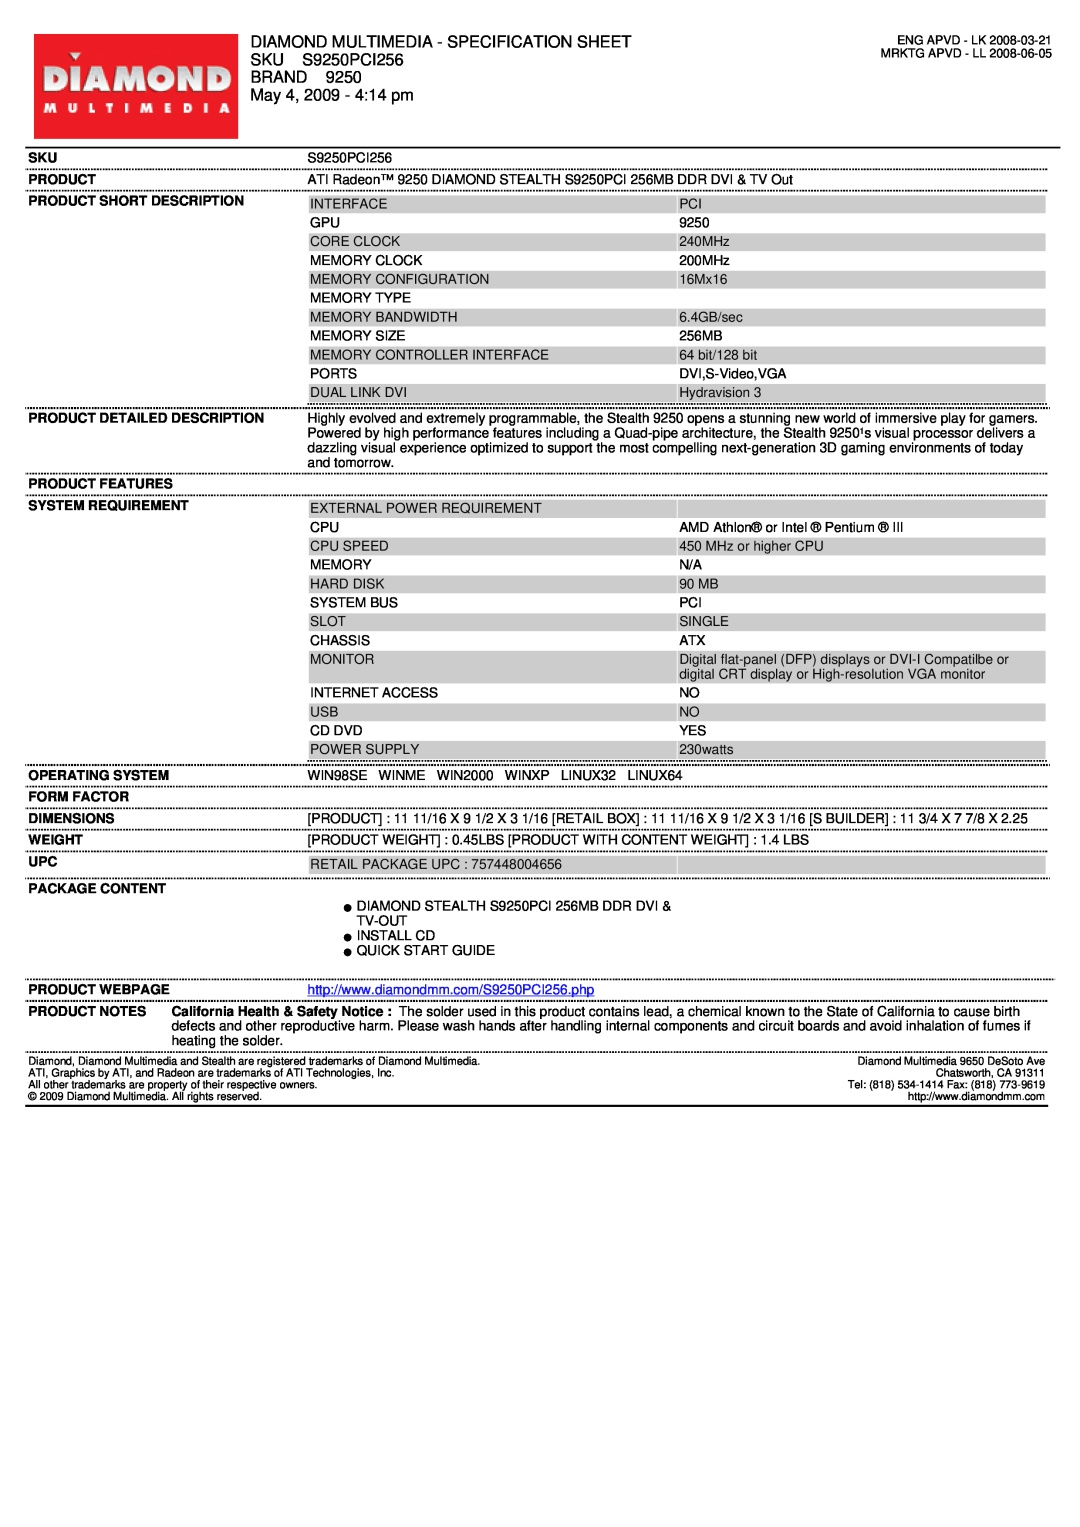 Diamond Multimedia specifications Diamond Multimedia - Specification Sheet, S9250PCI256, Brand, May 4, 2009 - 414 pm 